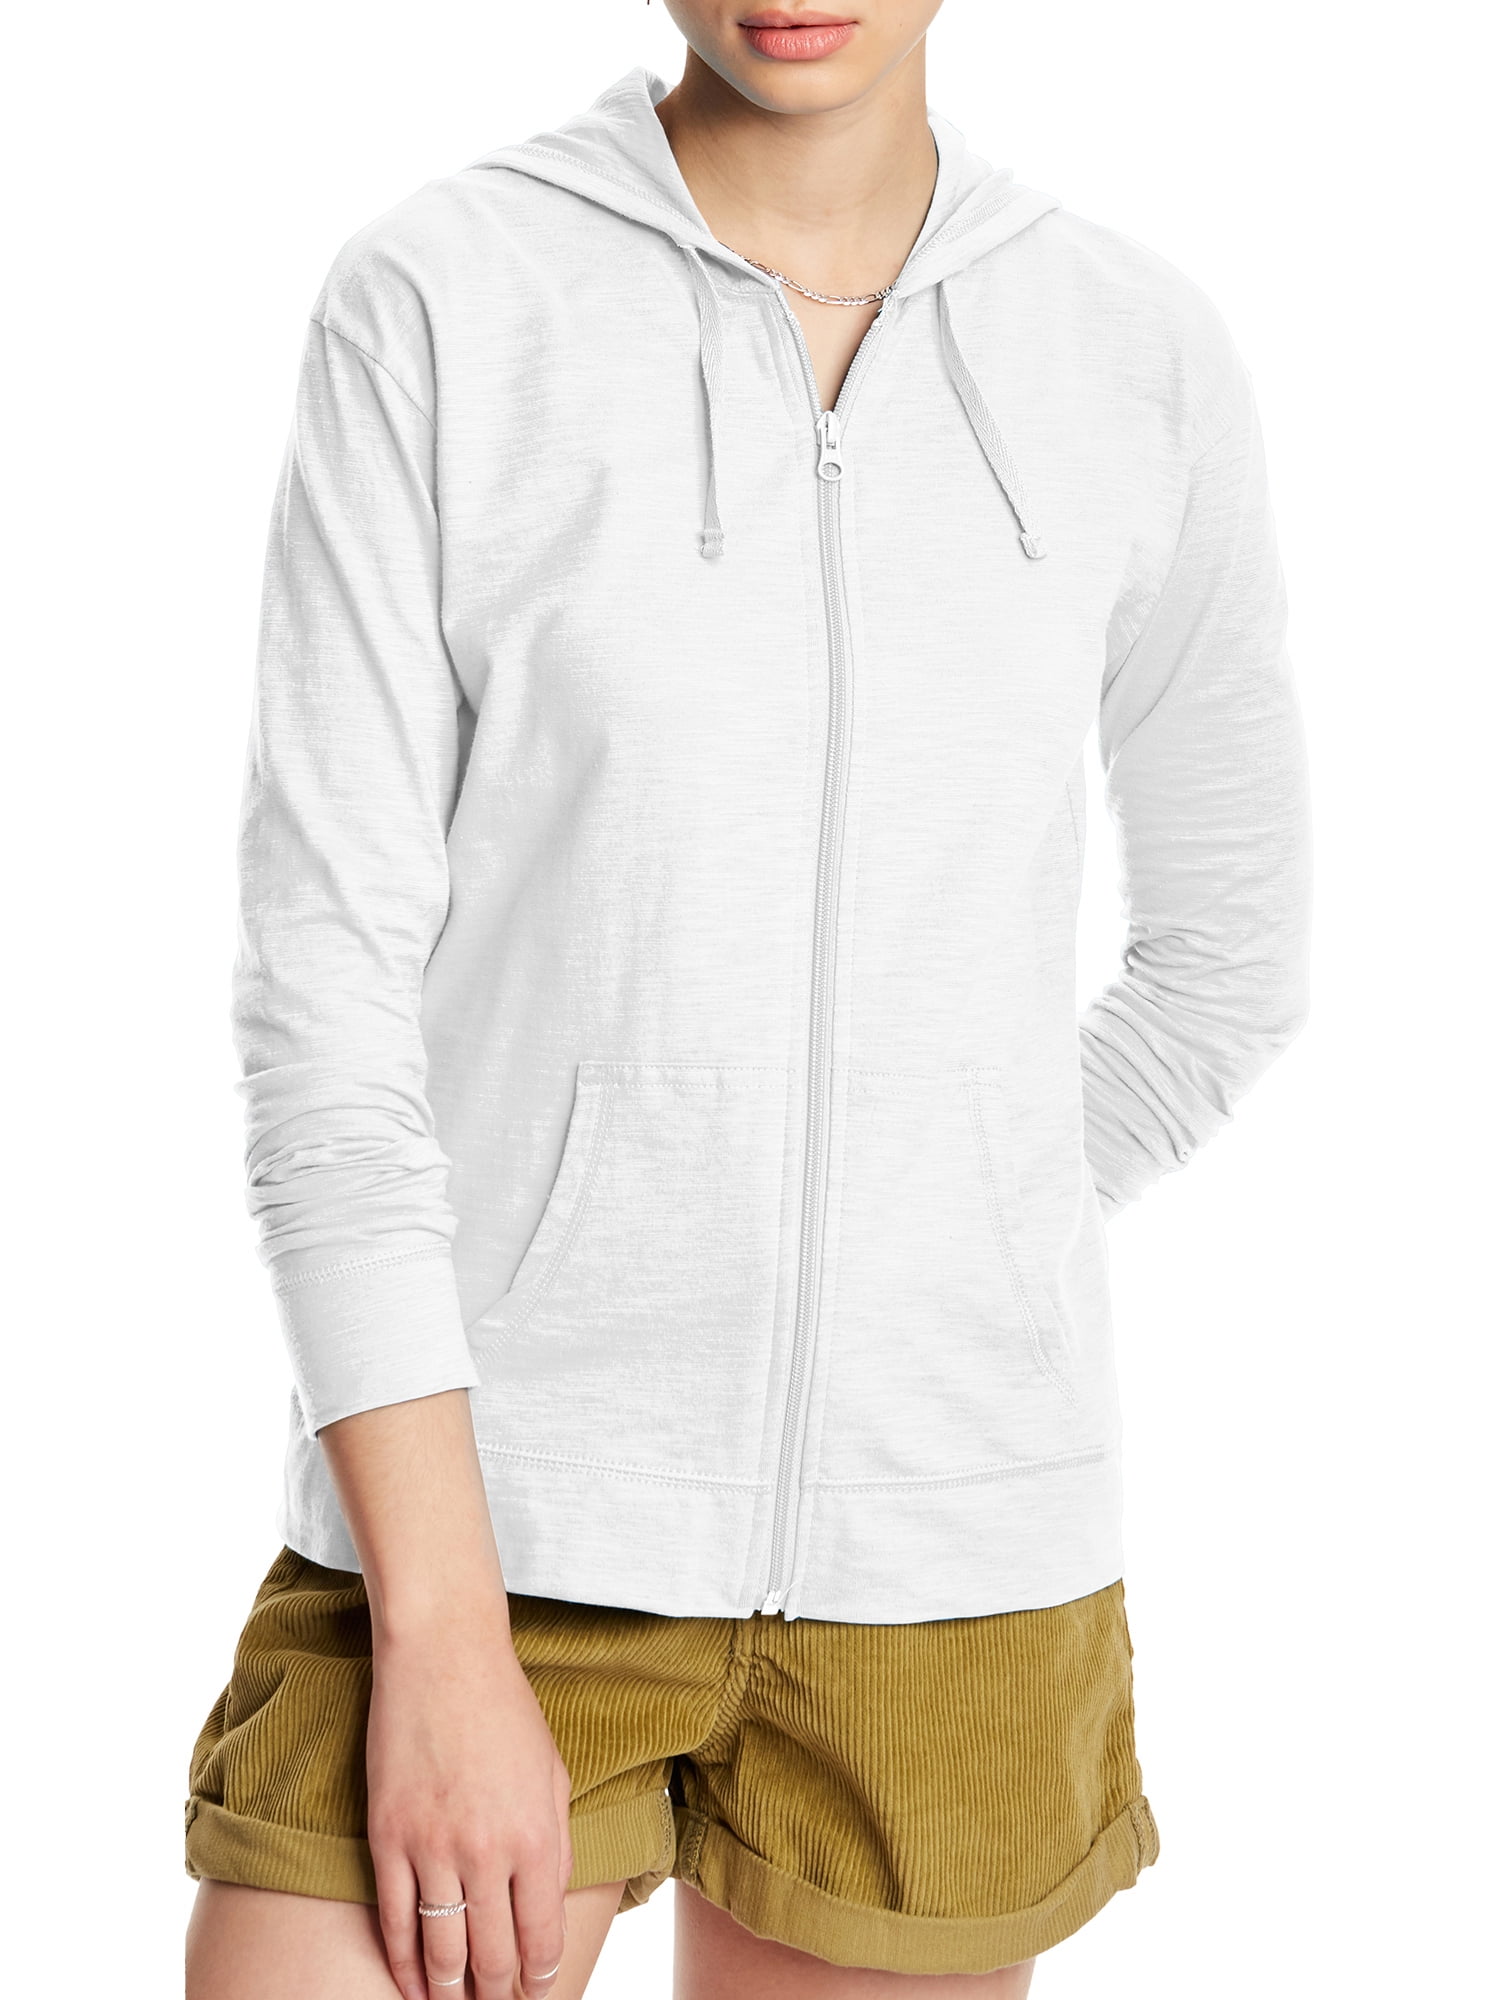 Adults Mens Womens Cricket White Bowls Top Jacket Zip Up Pockets Sweatshirt 